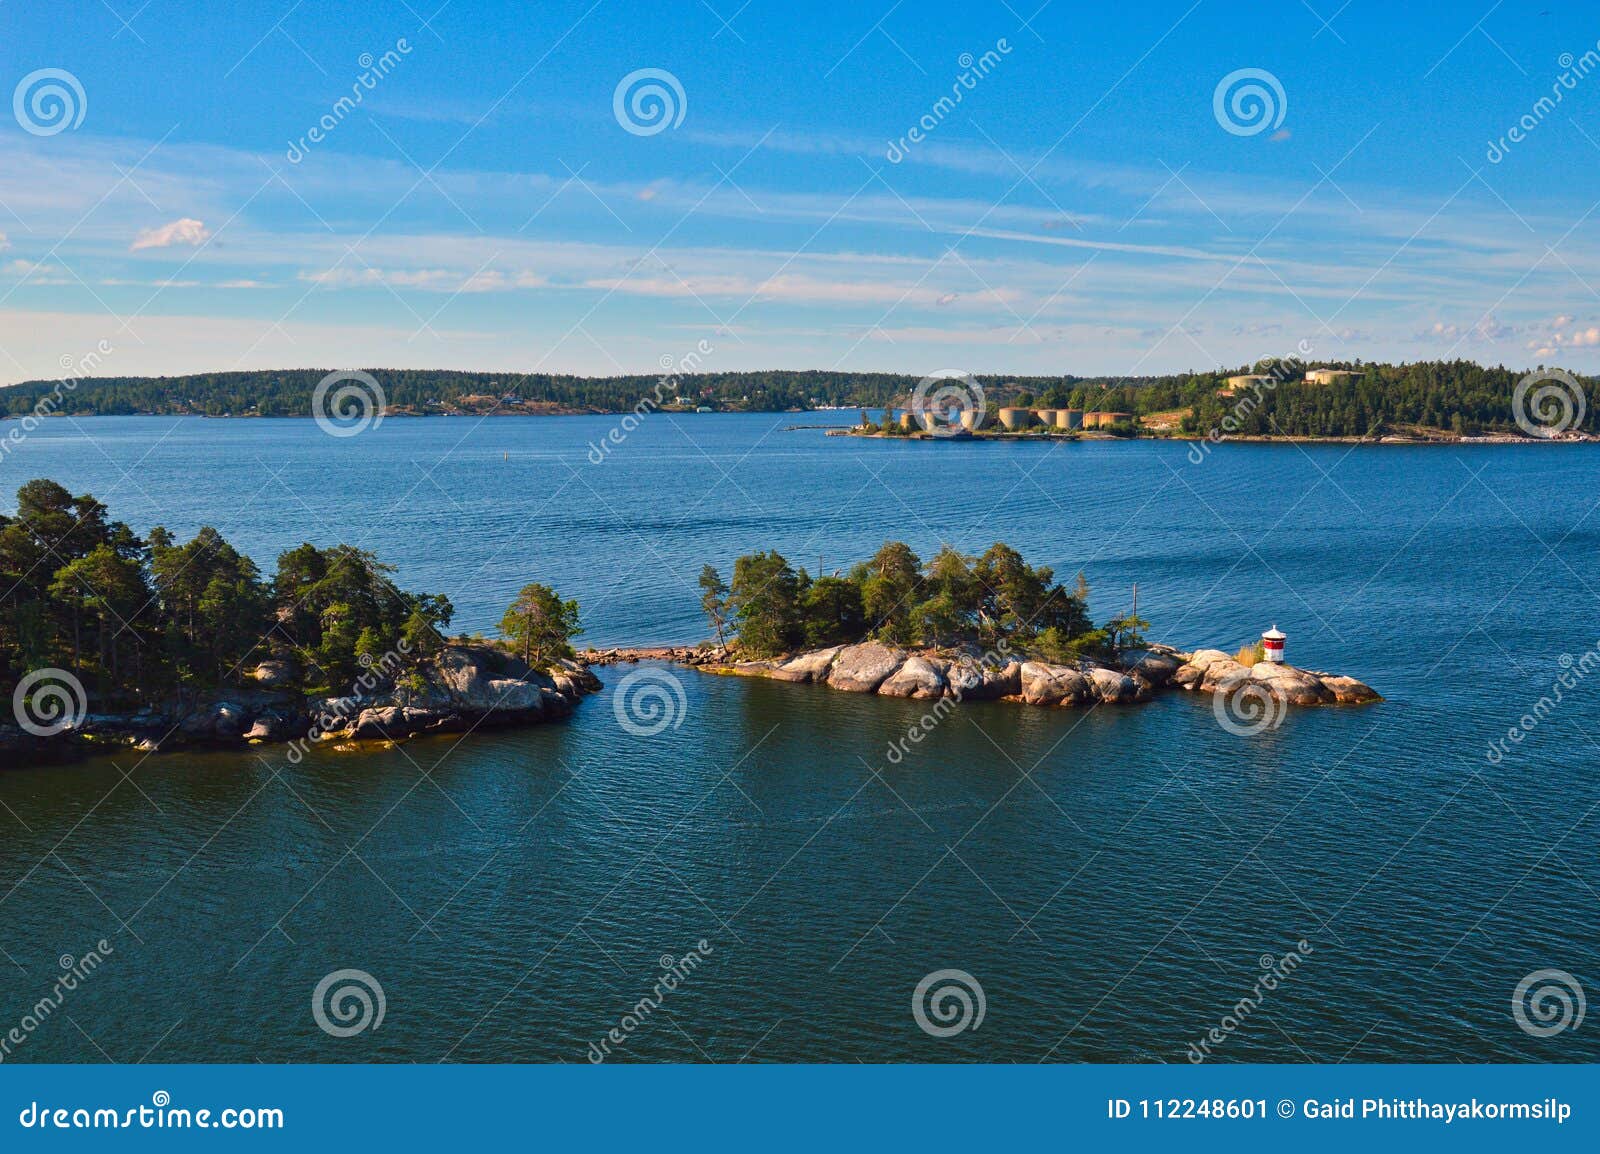 islets of stockholm archipelago in baltic sea, sweden